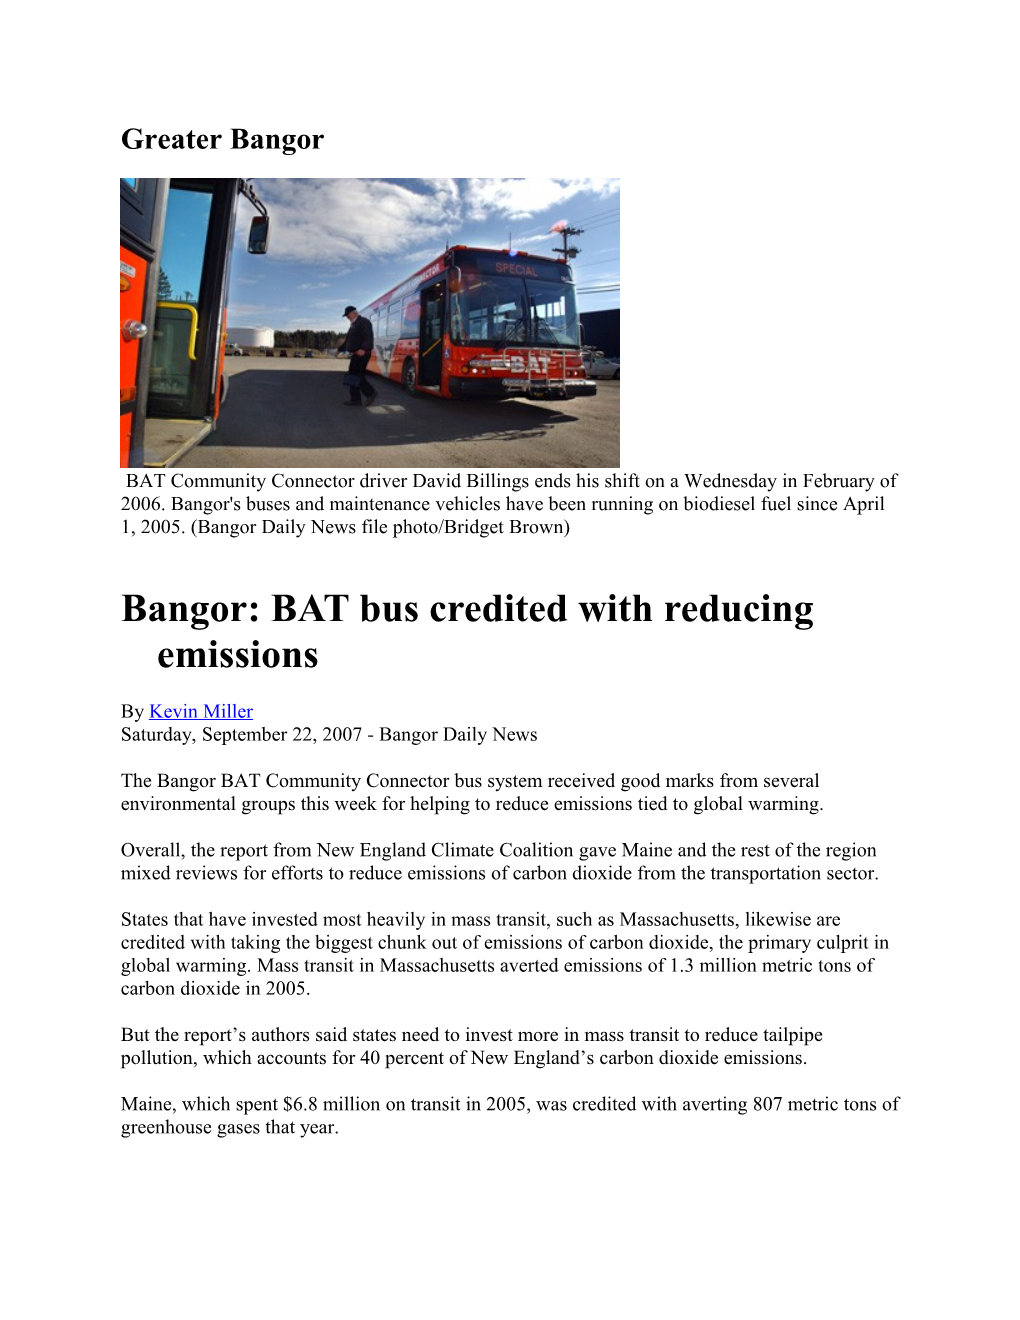 Bangor: BAT Bus Credited with Reducing Emissions